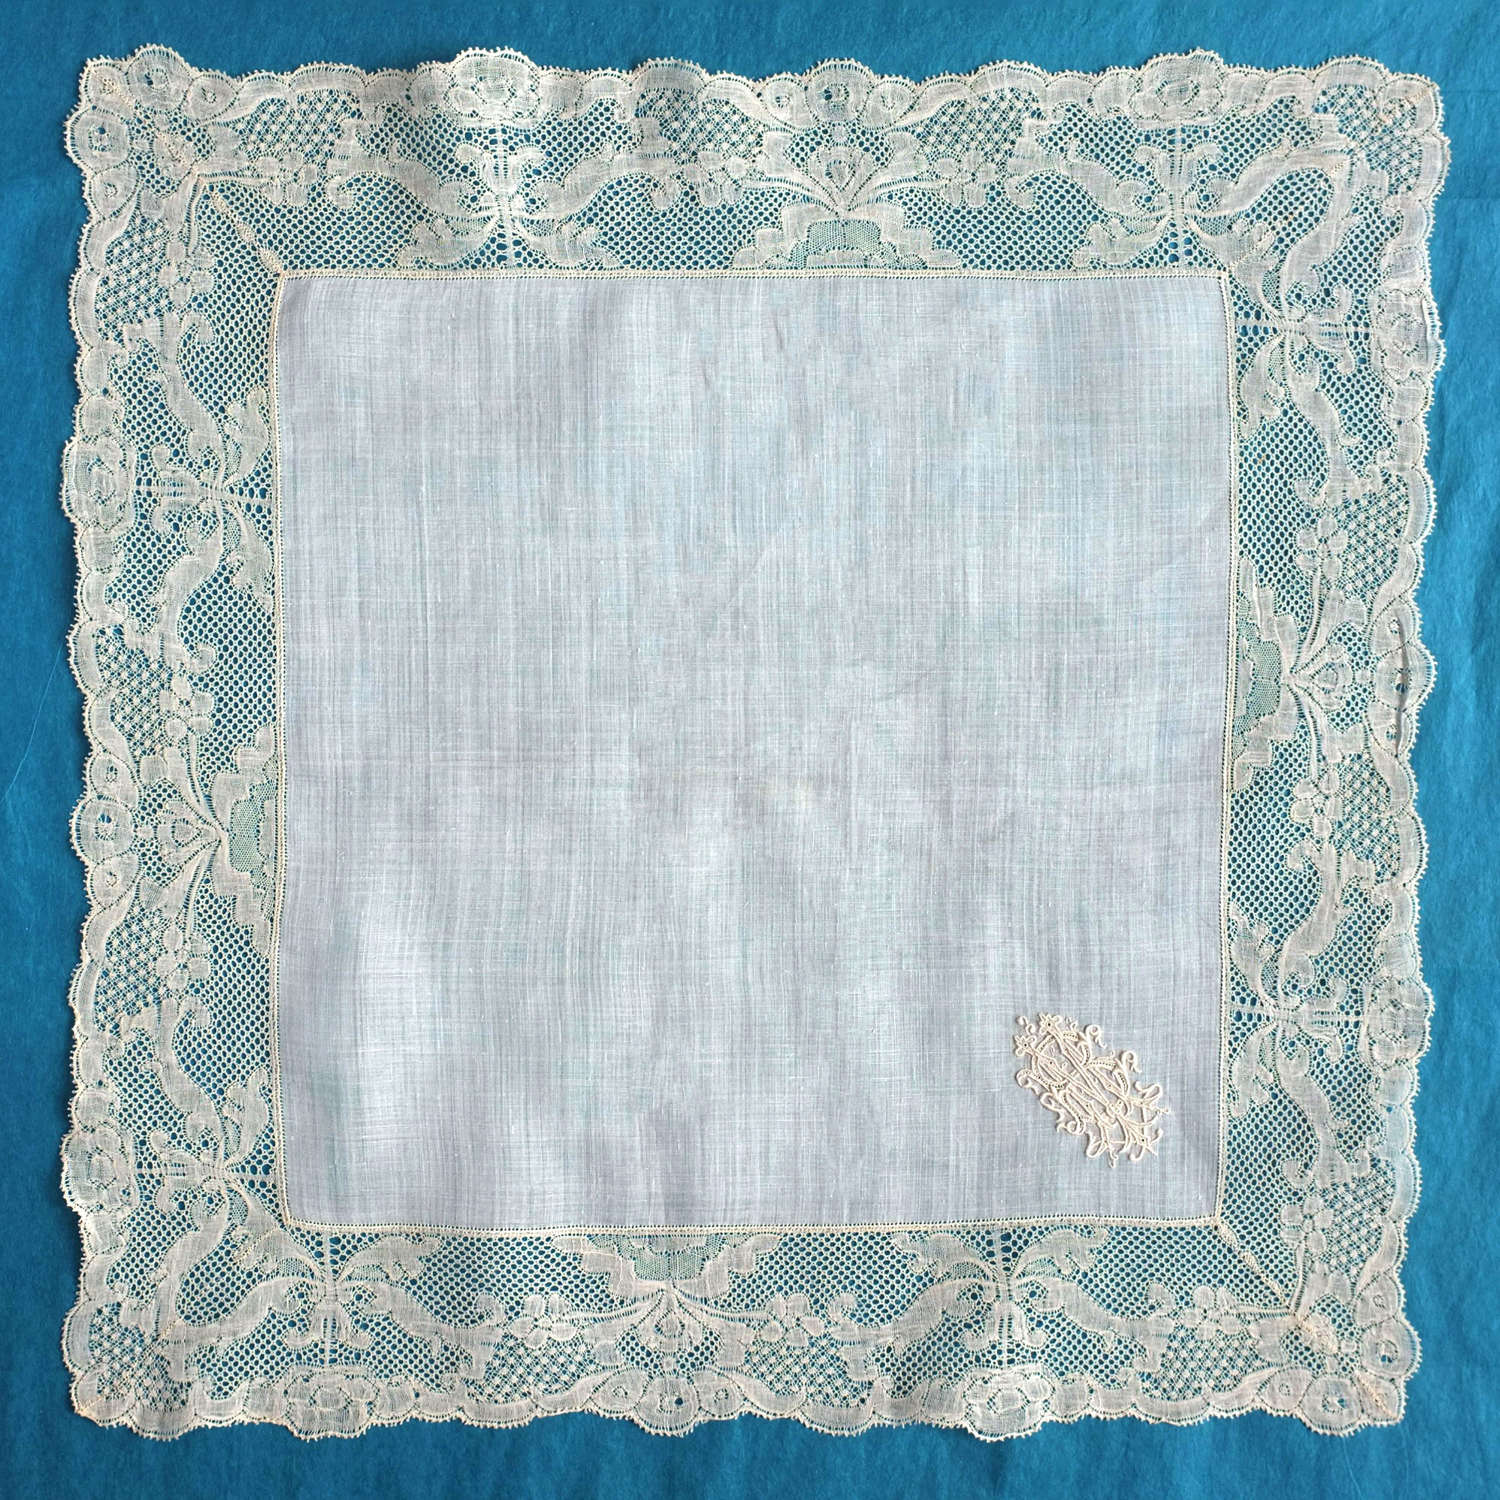 Antique 19th C Handkerchief with 18th C Valenciennes Lace Border